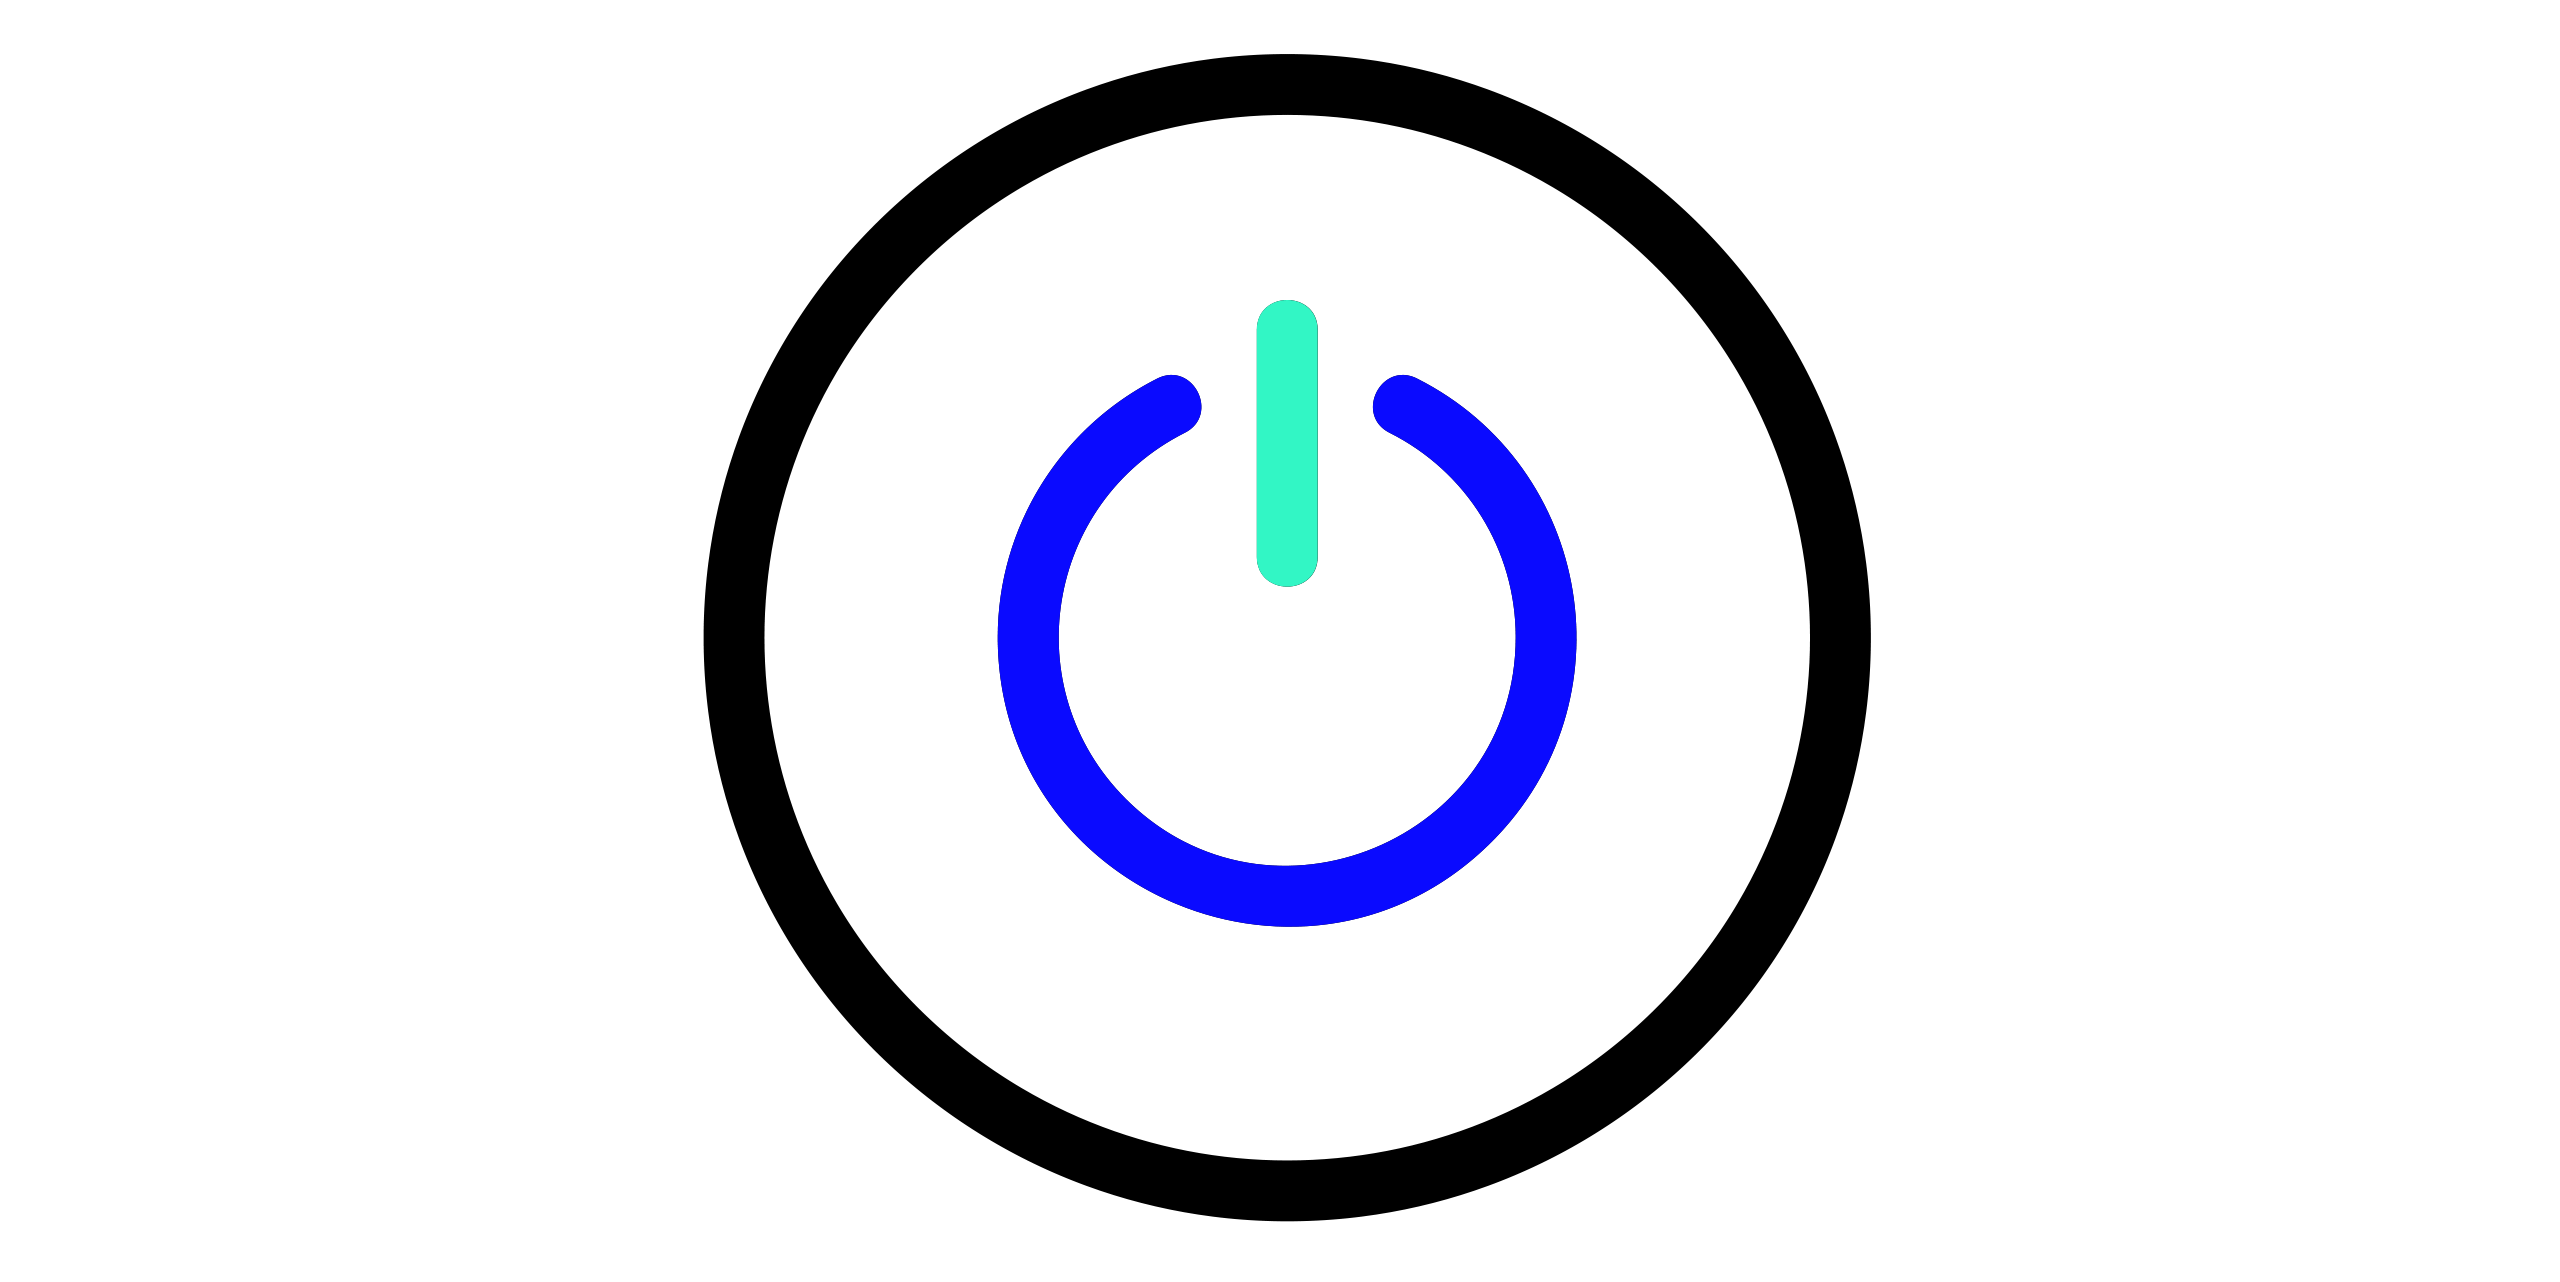 Icon of a power button